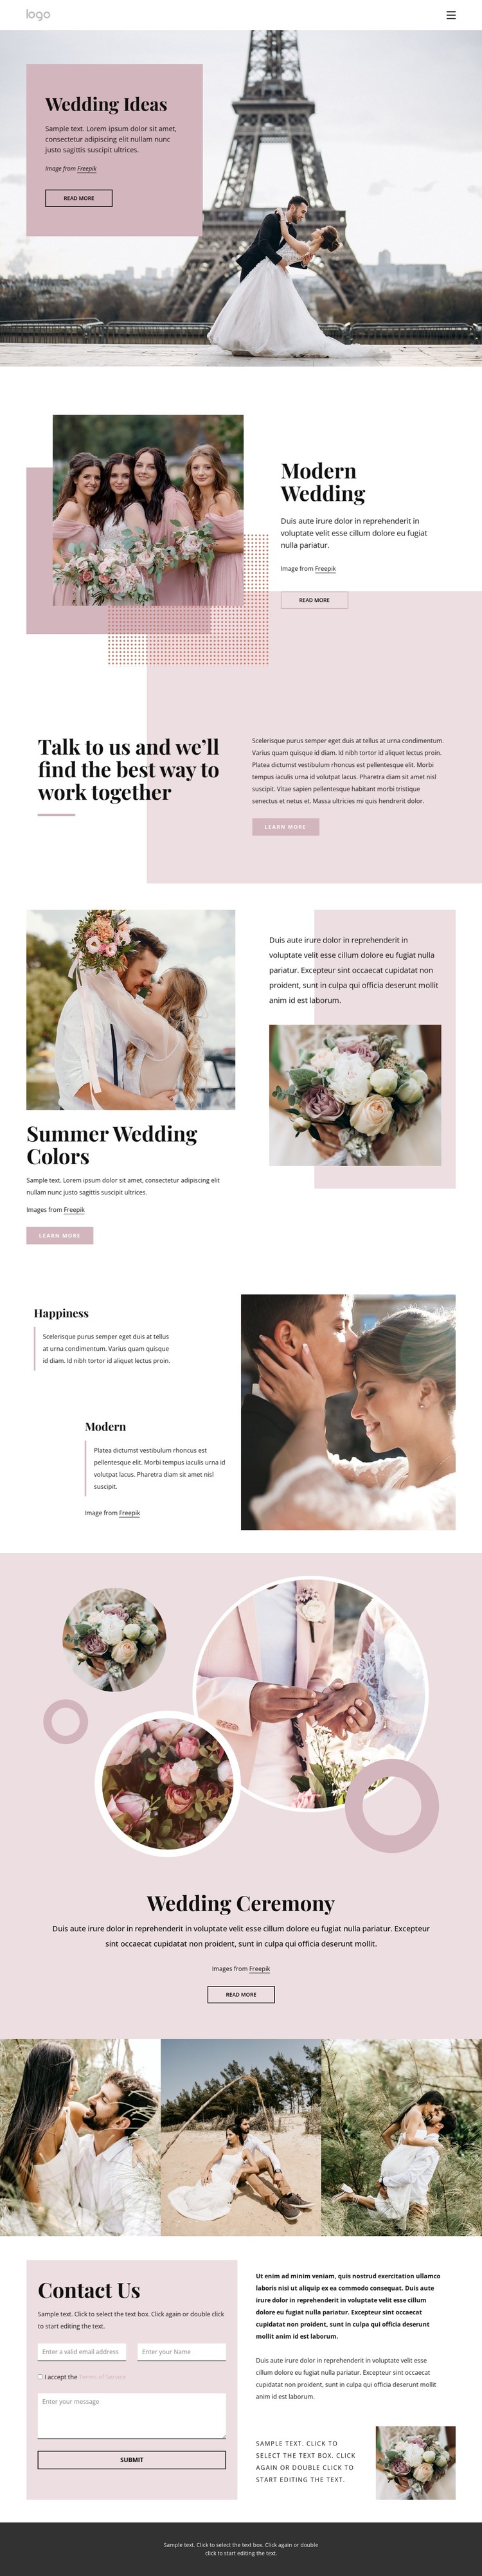 Unique wedding ceremony Web Design